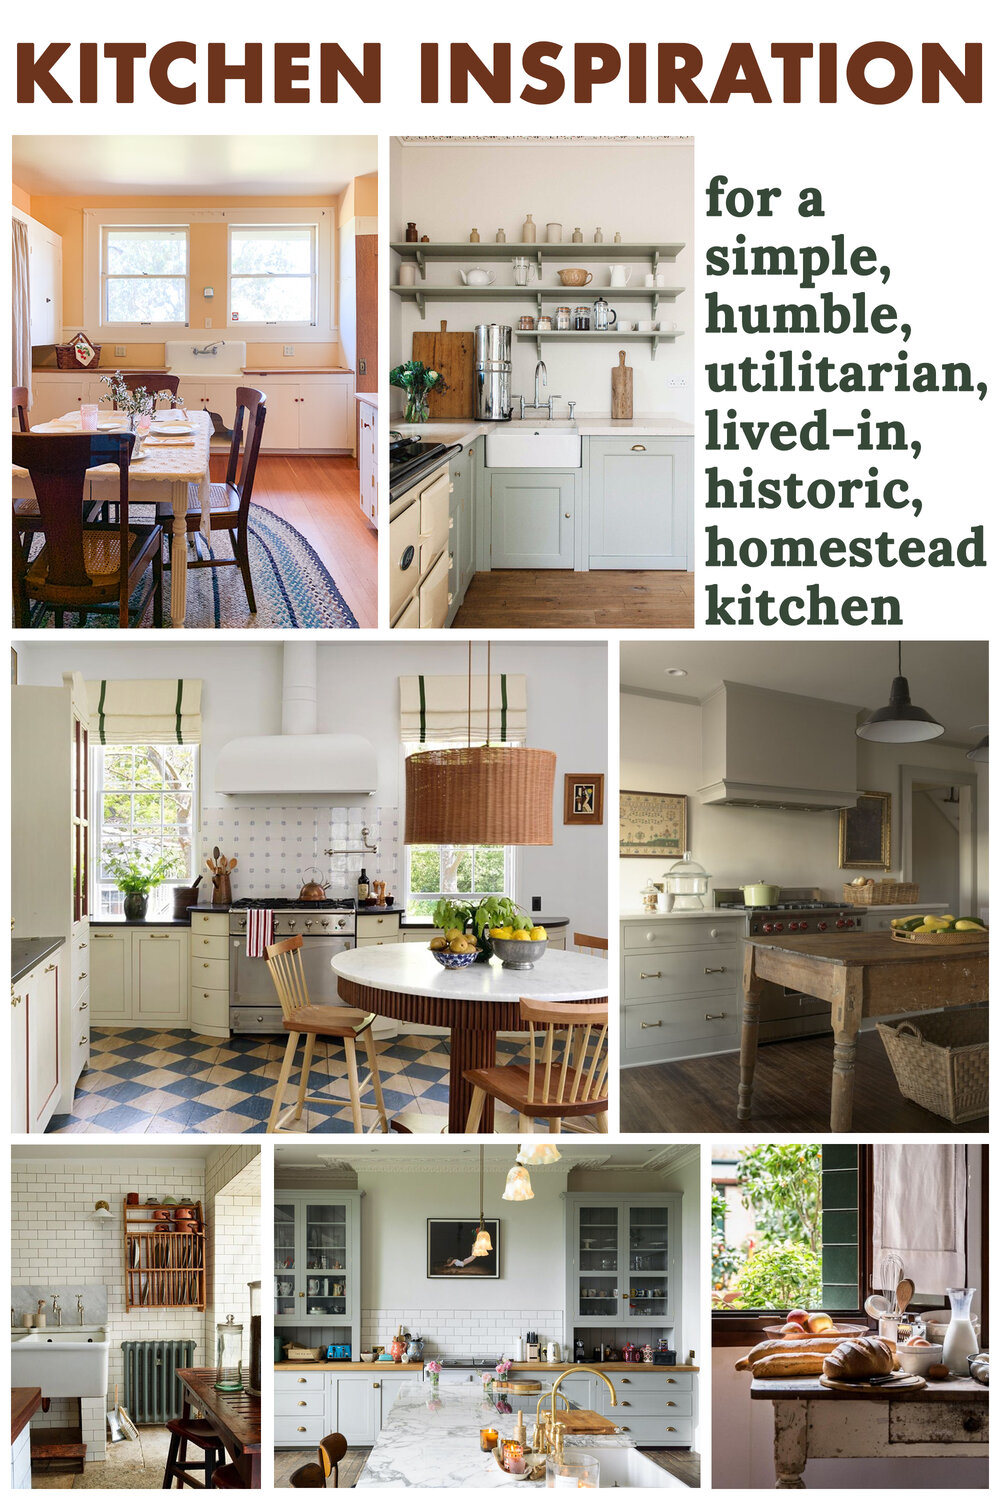 https://images.squarespace-cdn.com/content/v1/56b9368640261d38c26f67cd/1603653895863-ZJBMU6TB03OVRJV1SSPC/Kitchen+Inspiration+for+a+Simple%2C+Humble%2C+Utilitarian%2C+Lived-in%2C+Historic%2C+Homestead+Kitchen.jpg?format=1000w